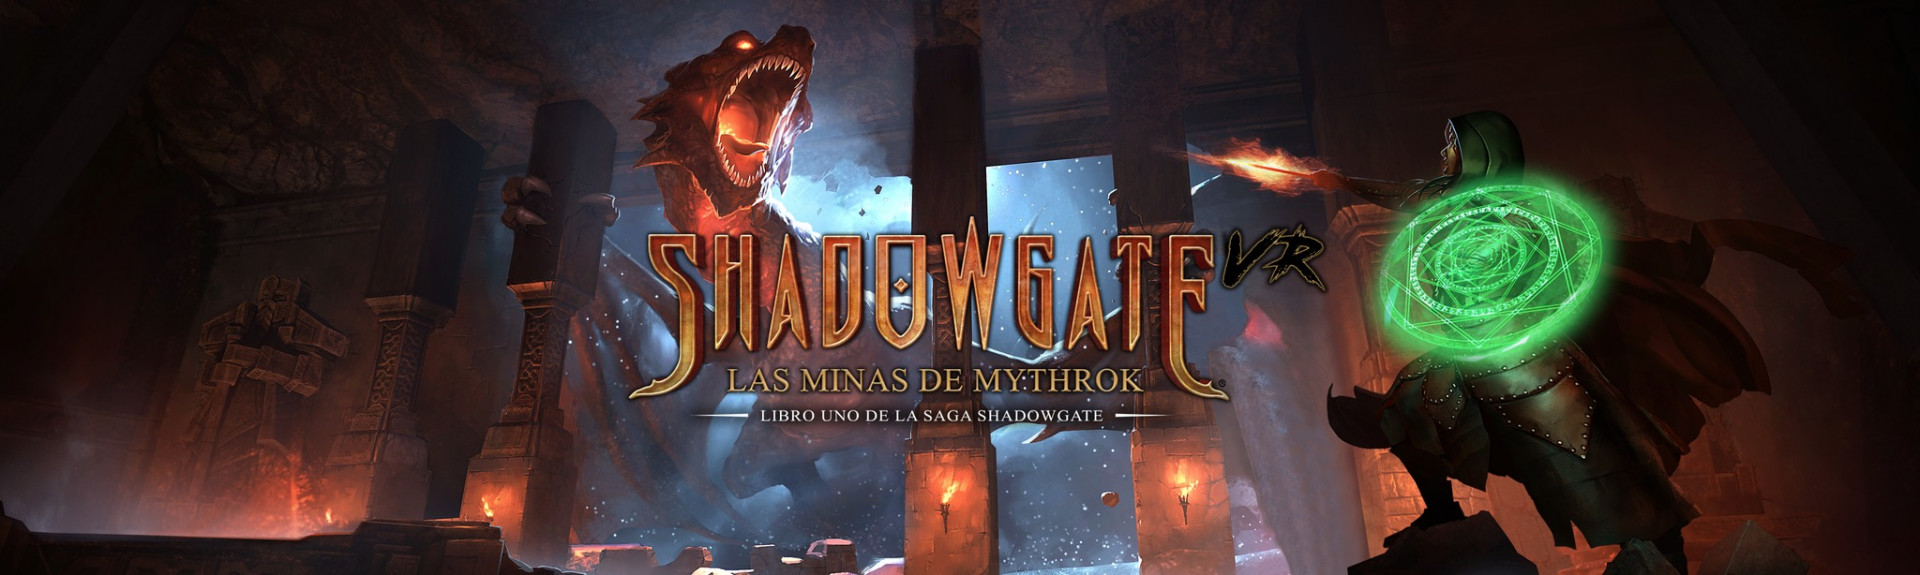 Shadowgate VR: Las Minas de Mythrok - ANÁLISIS